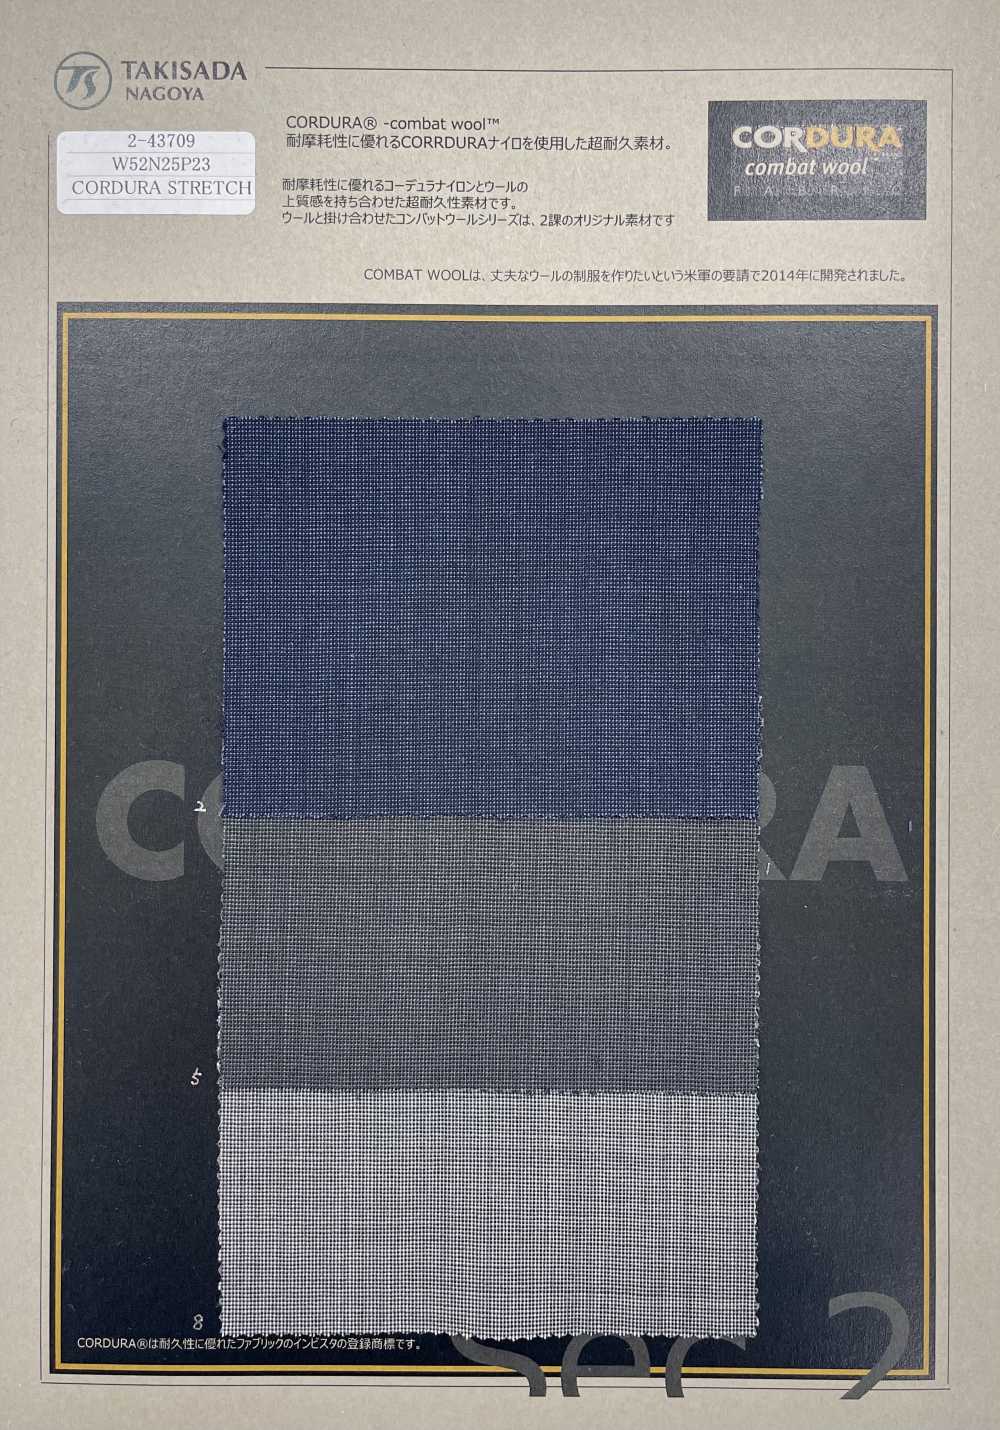 2-43709 Cabeça De Pino Tropical CORDURA COMBATWOOL[Têxtil / Tecido] Takisada Nagoya